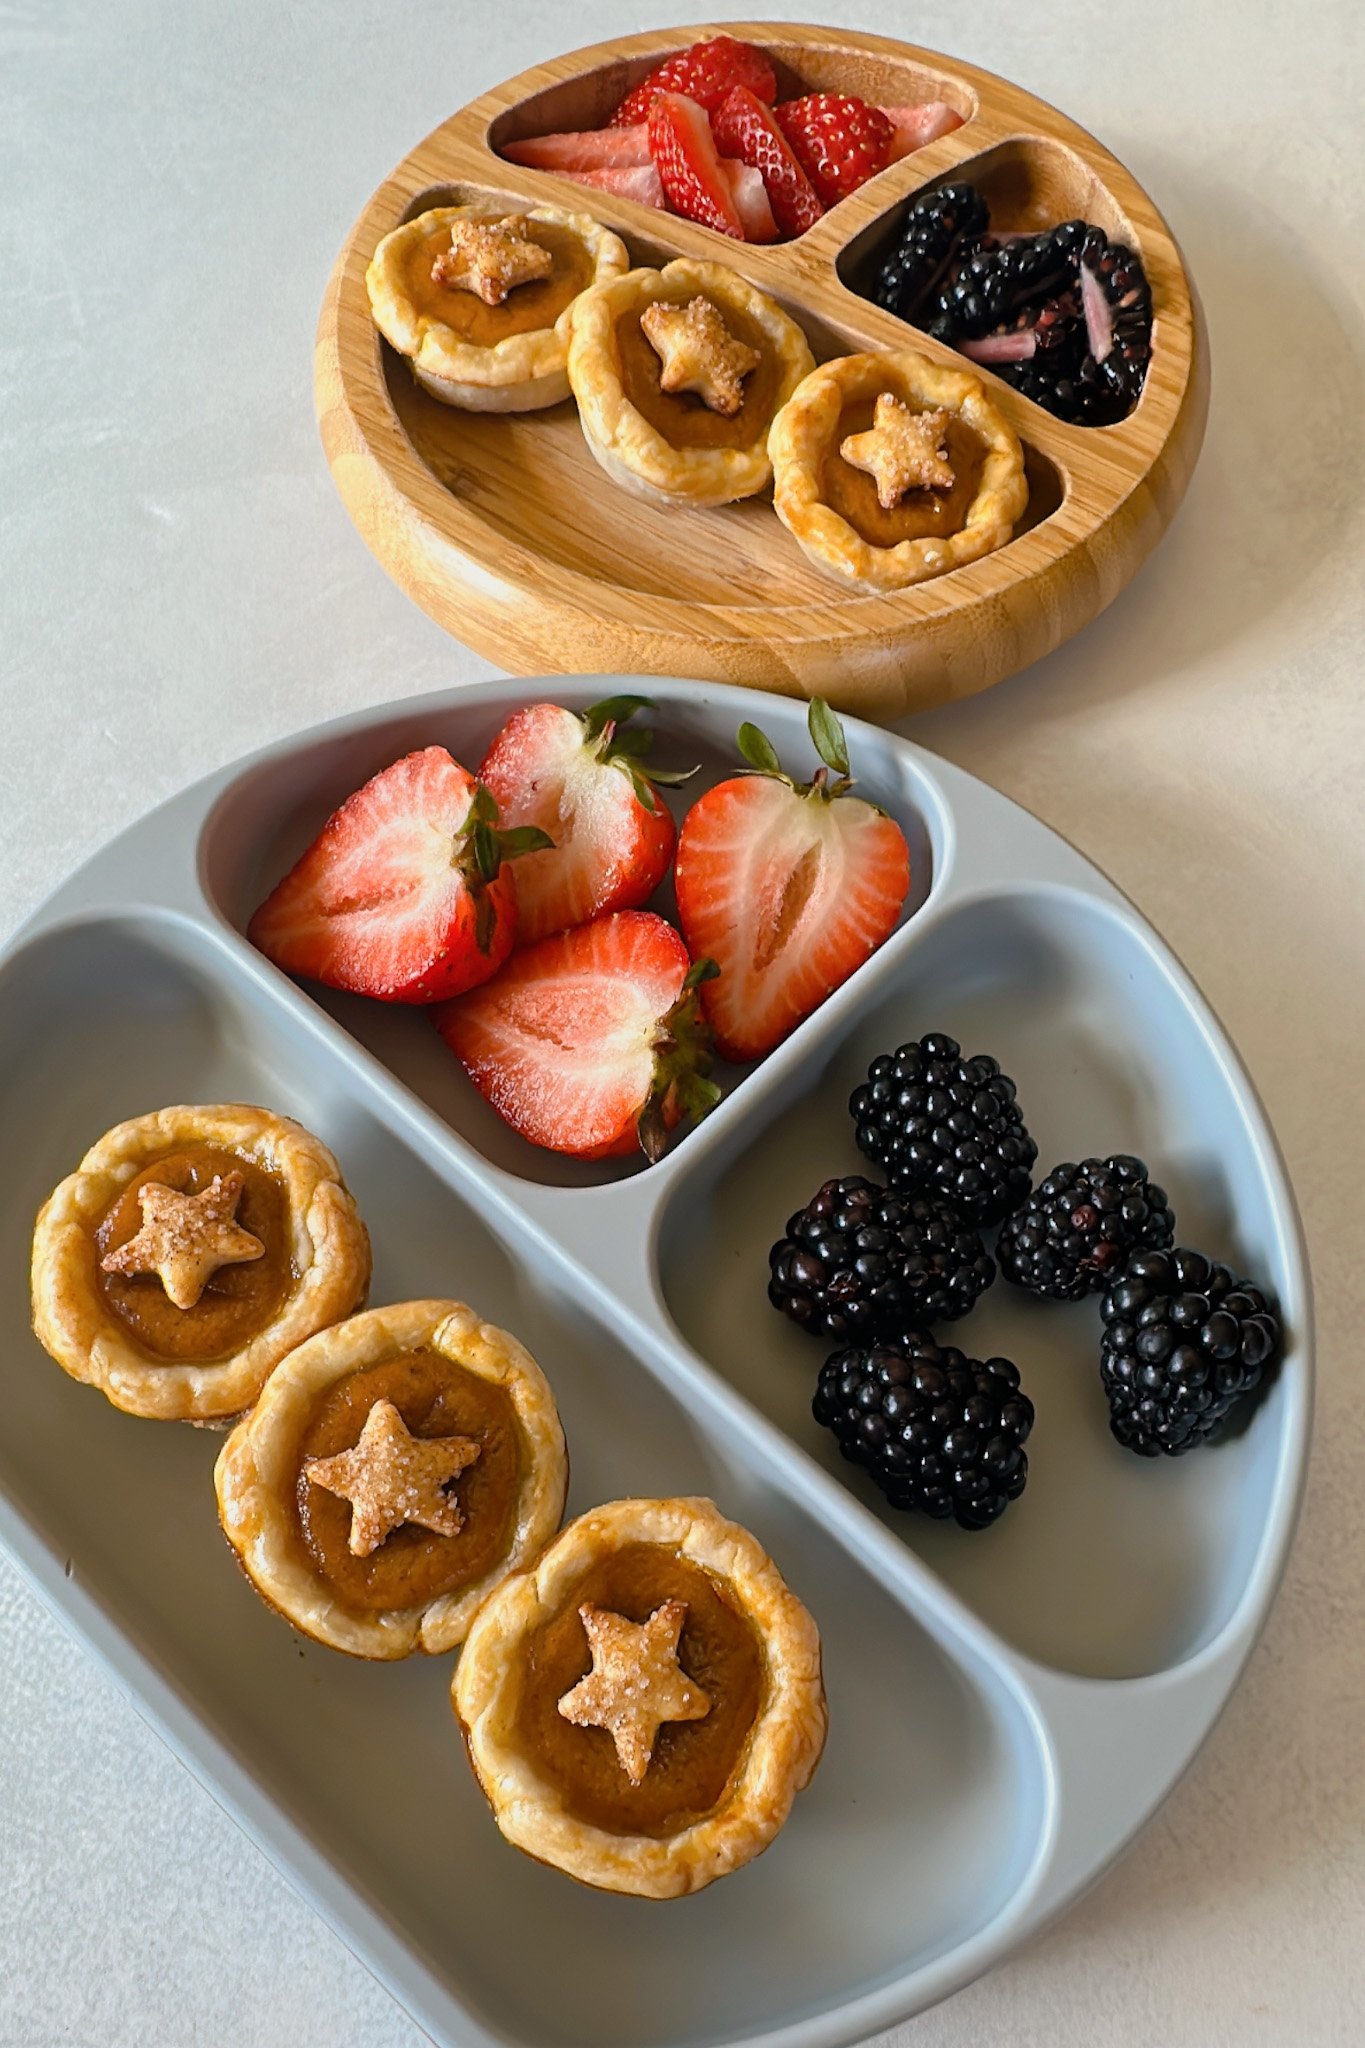 Maple sweetened mini pumpkin pies served with strawberries and blackberries.